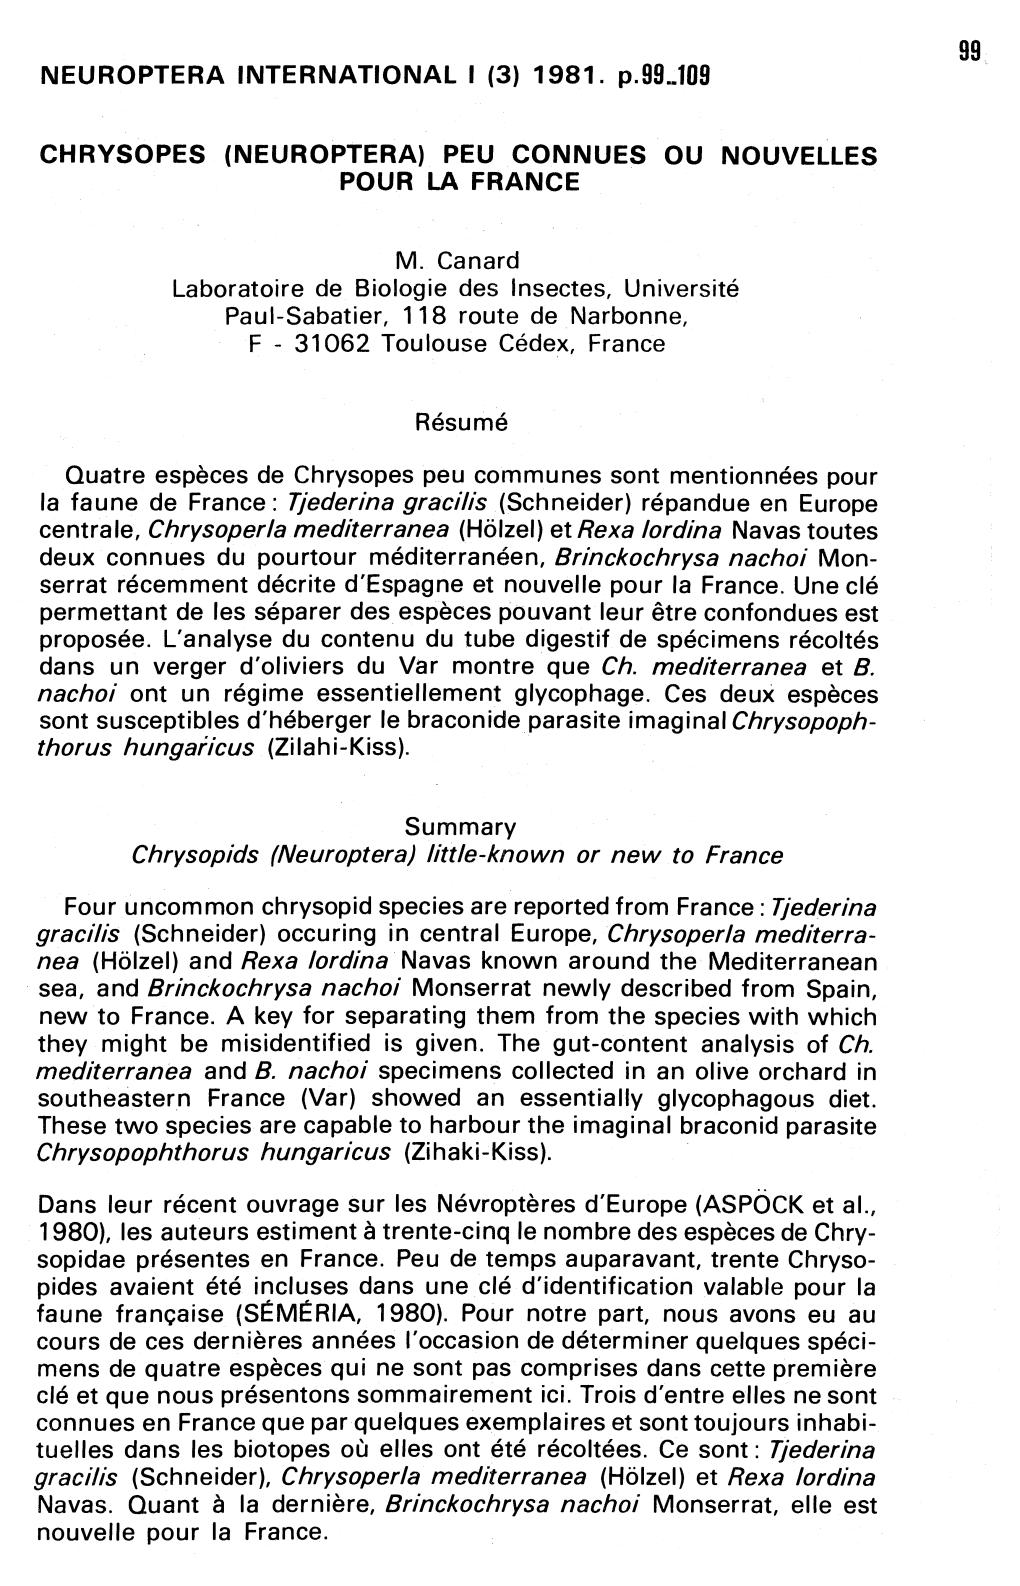 NEUROPTERA INTERNATIONAL 1 (3) 1981. P.99..109 CHRYSOPES